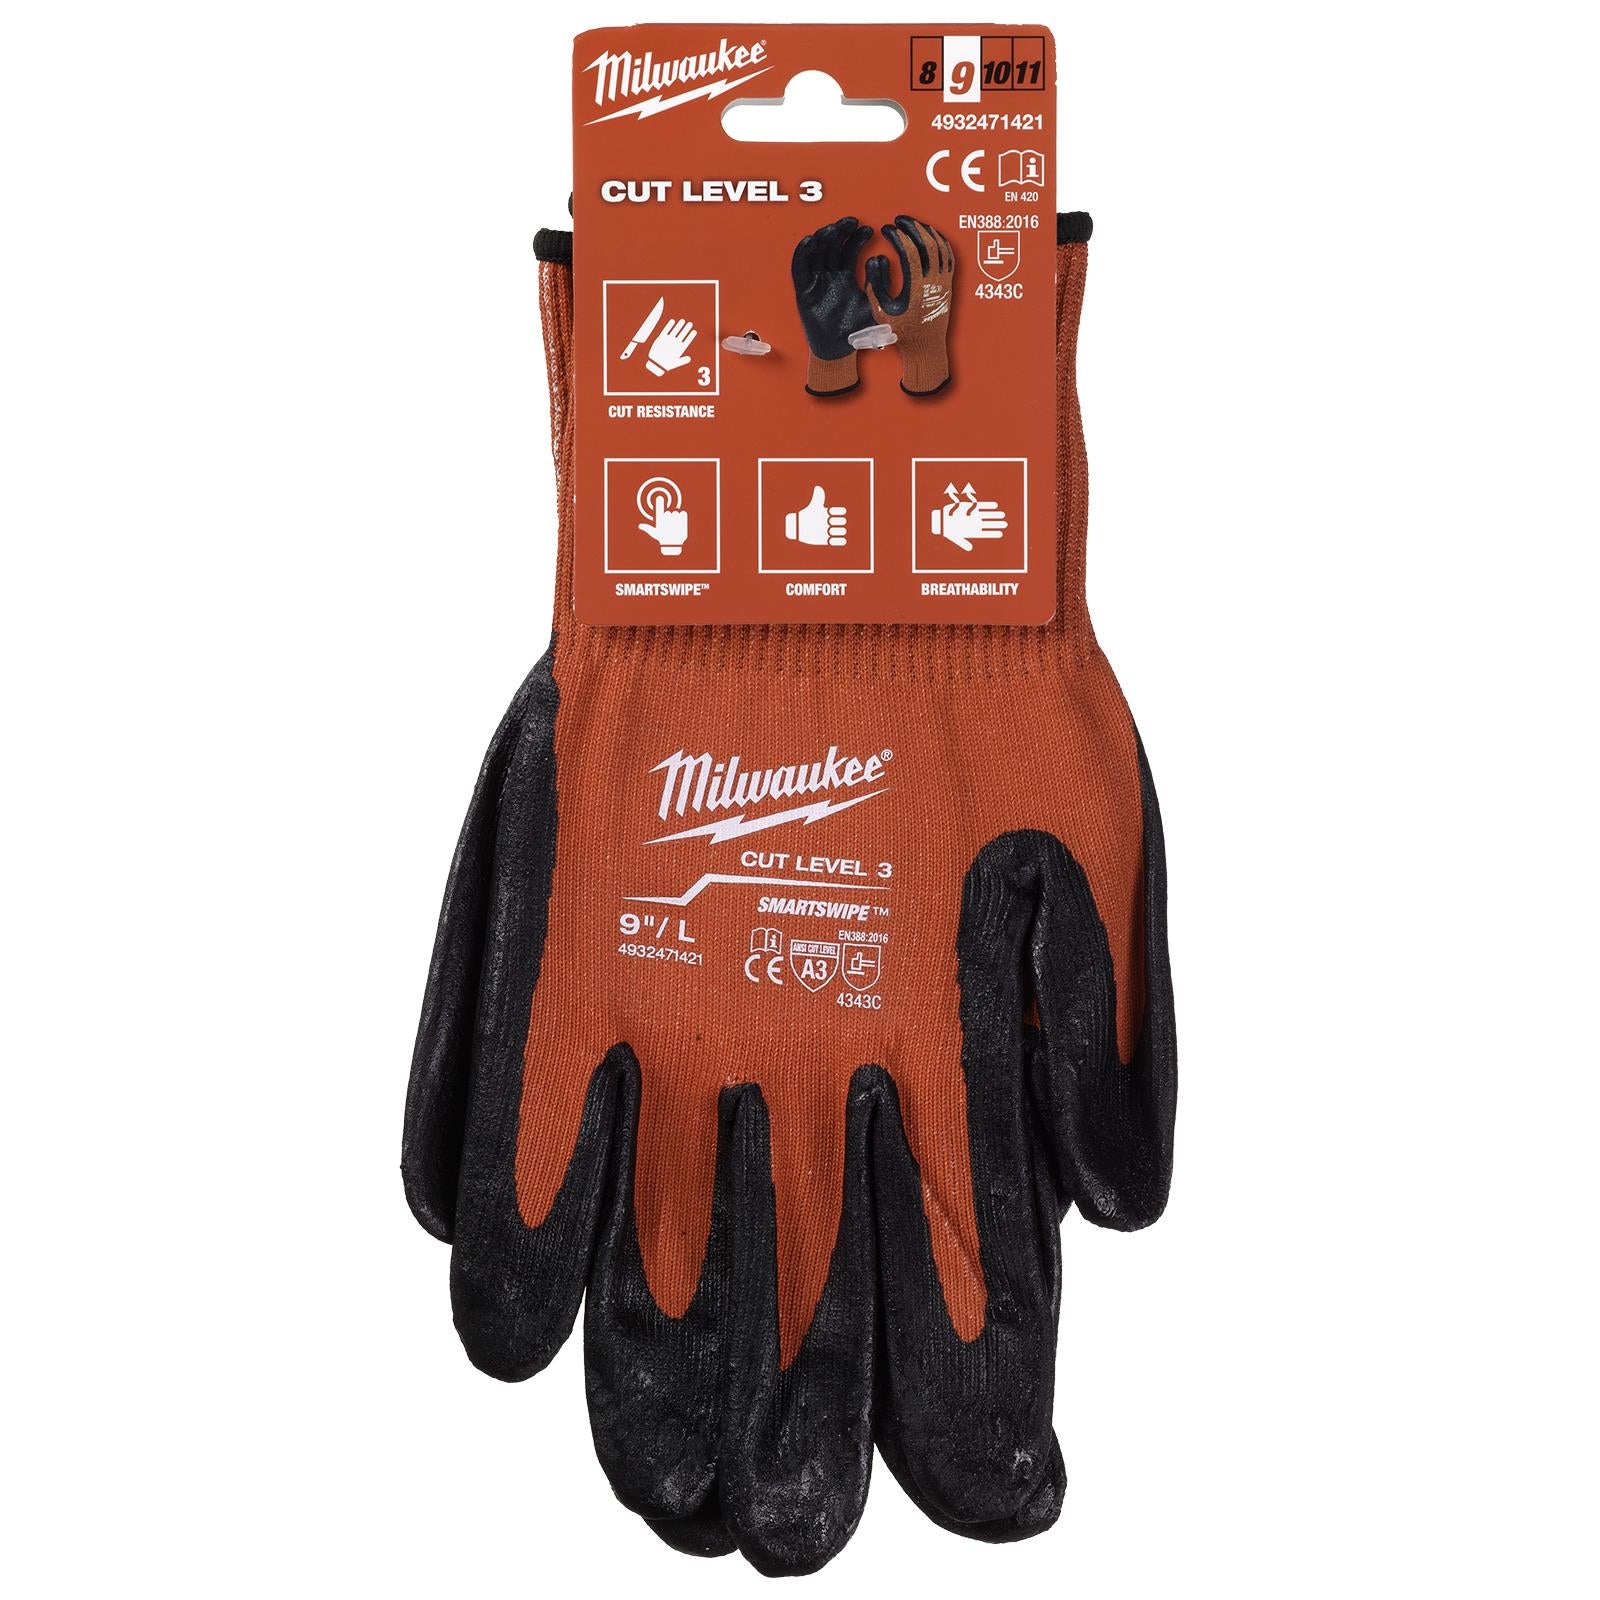 Milwaukee Safety Gloves Cut Level 3/C Dipped Glove Size 8 / M Medium